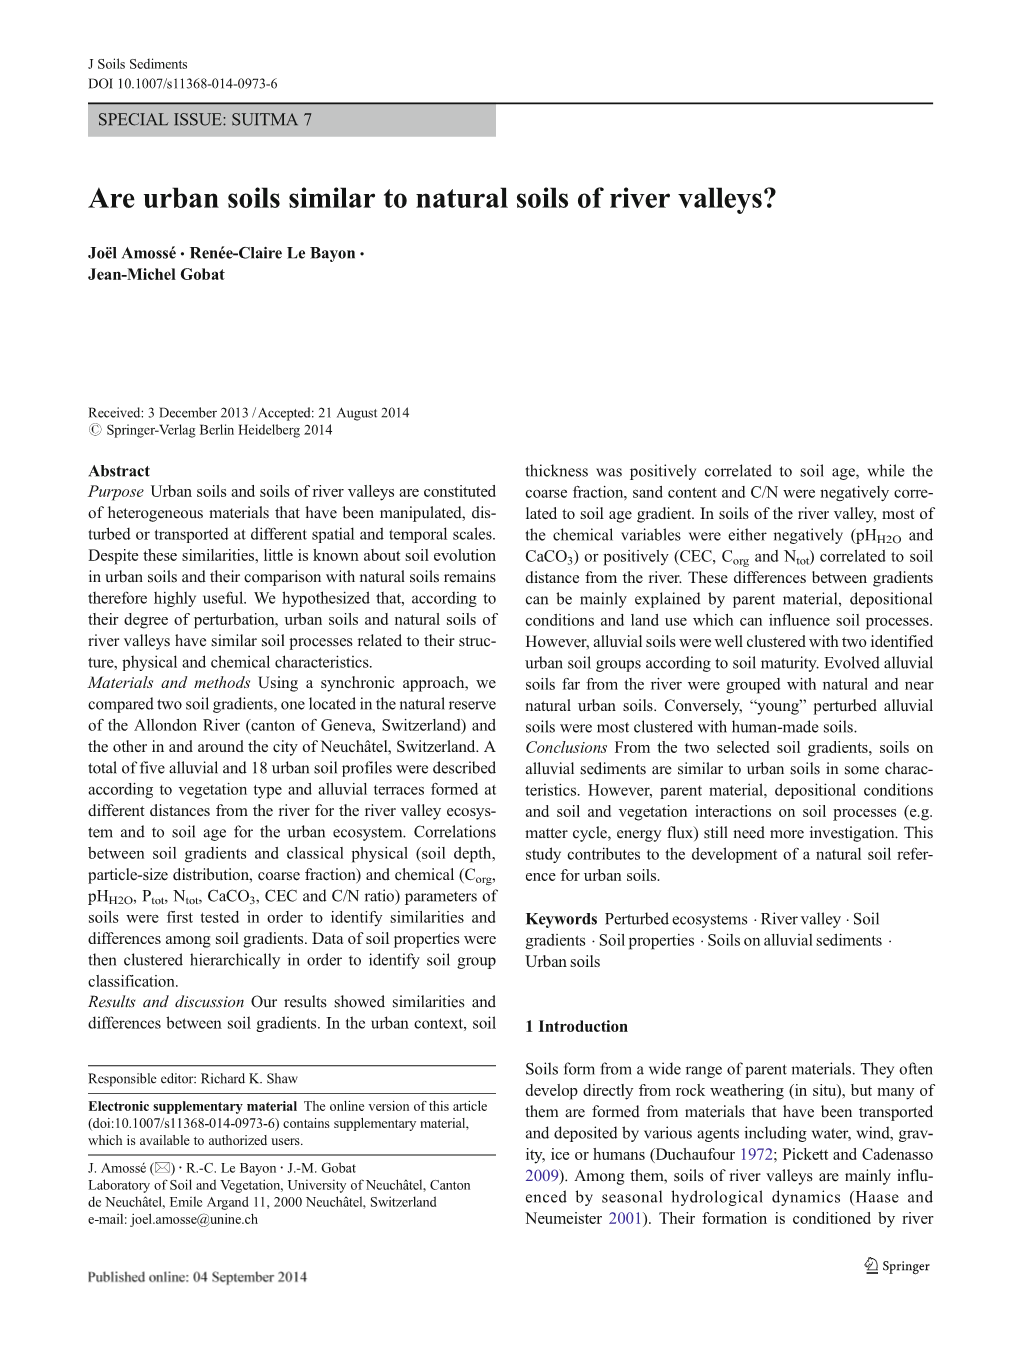 Are Urban Soils Similar to Natural Soils of River Valleys?